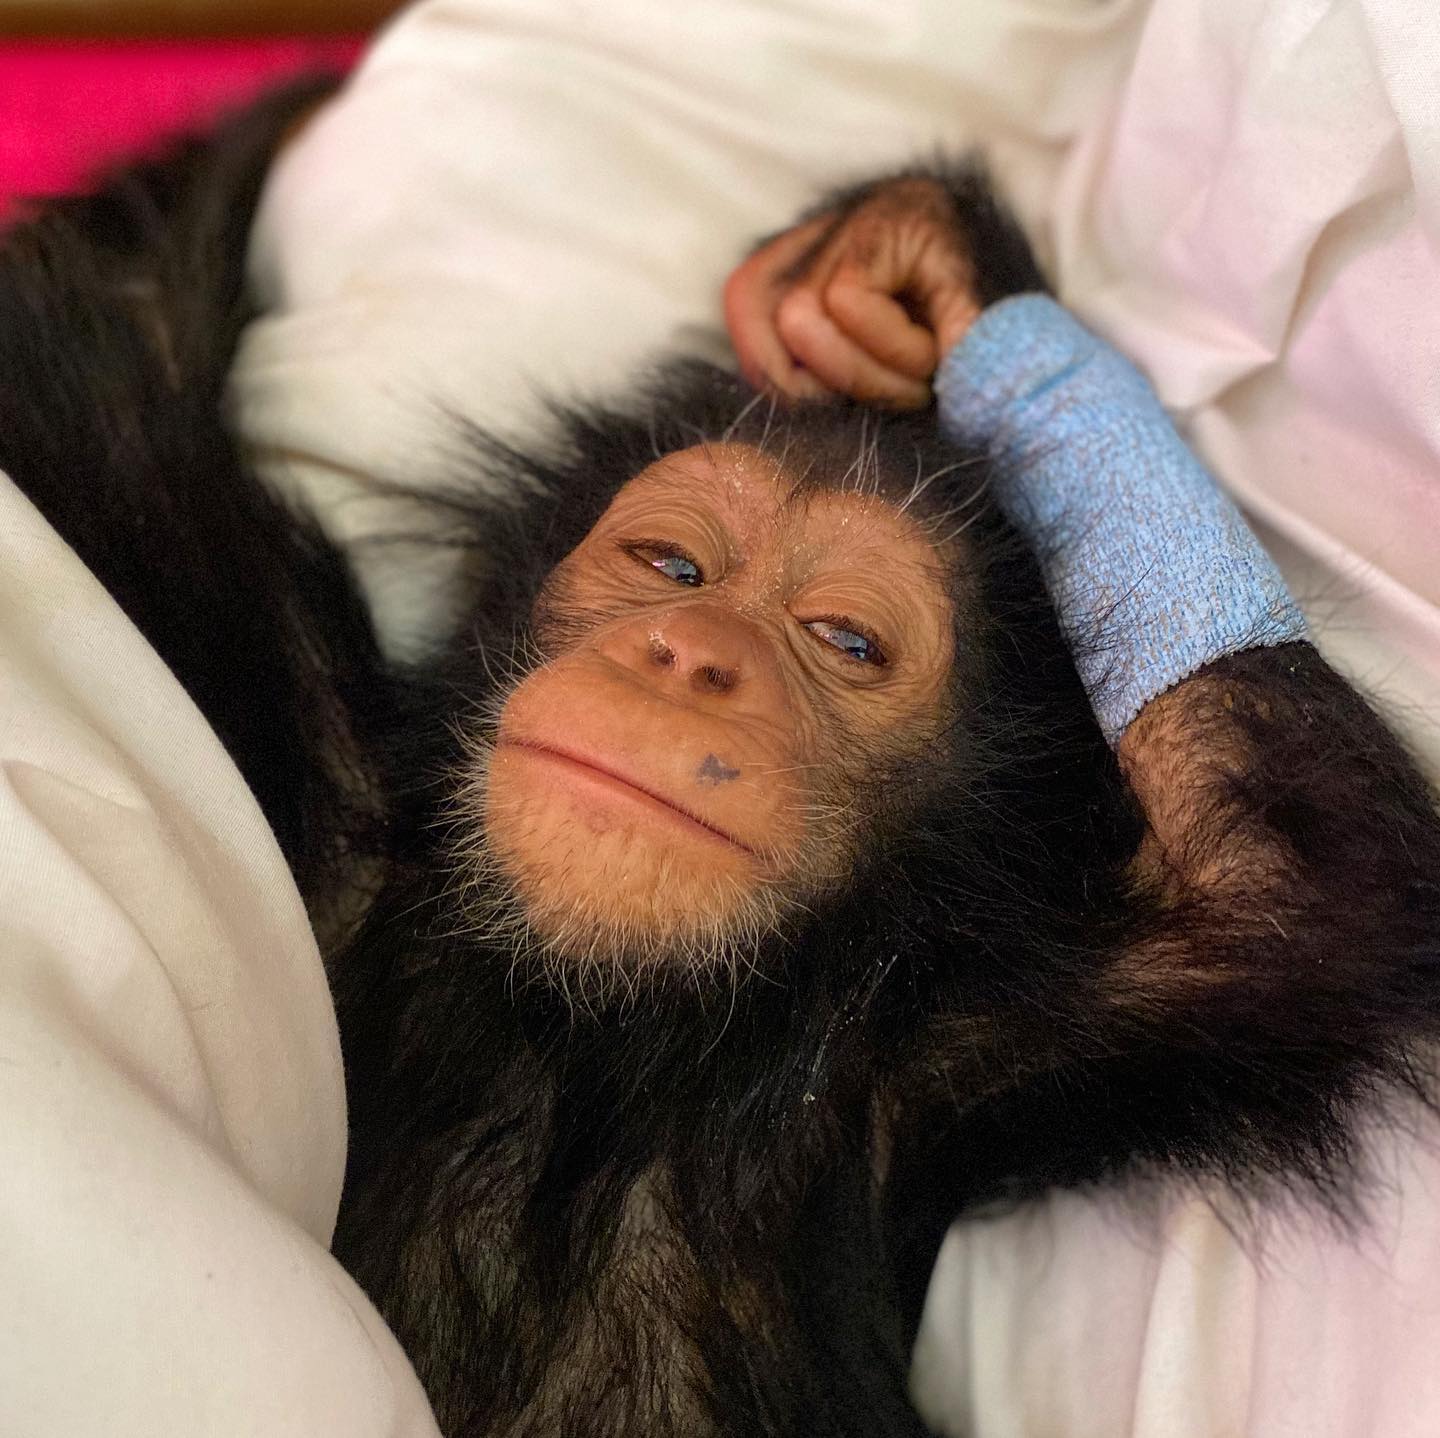 A baby chimpanzee